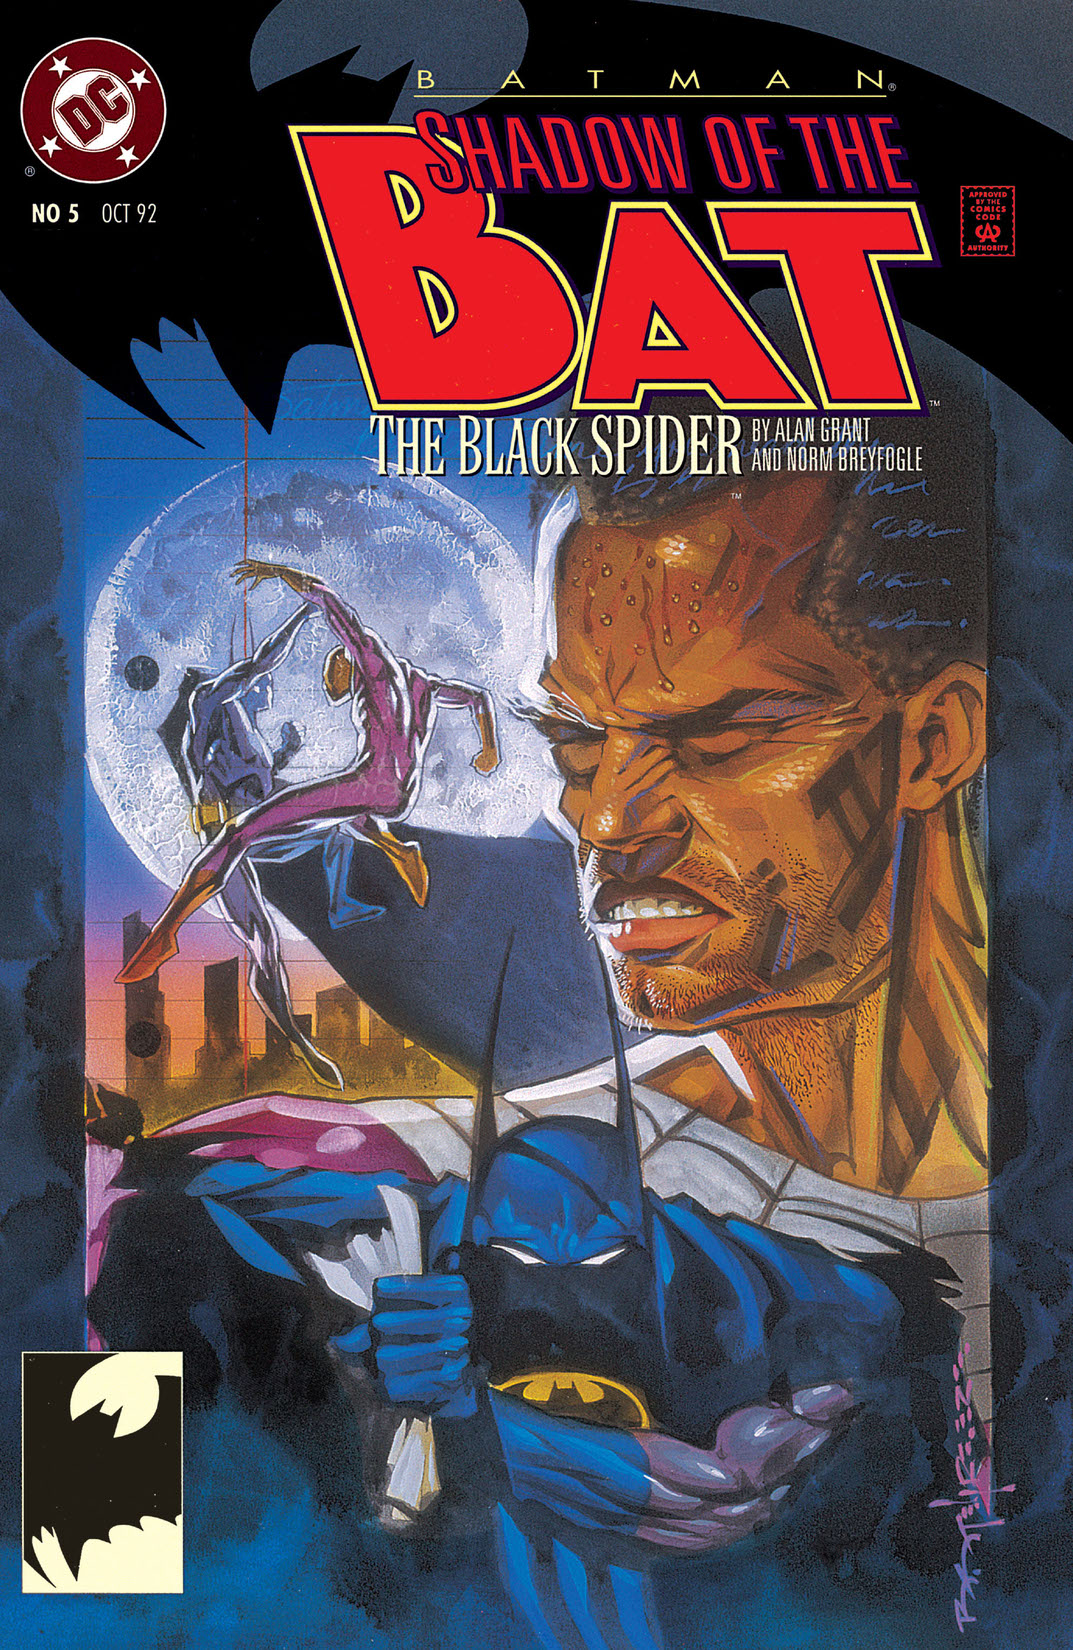 Batman: Shadow of the Bat #5 preview images